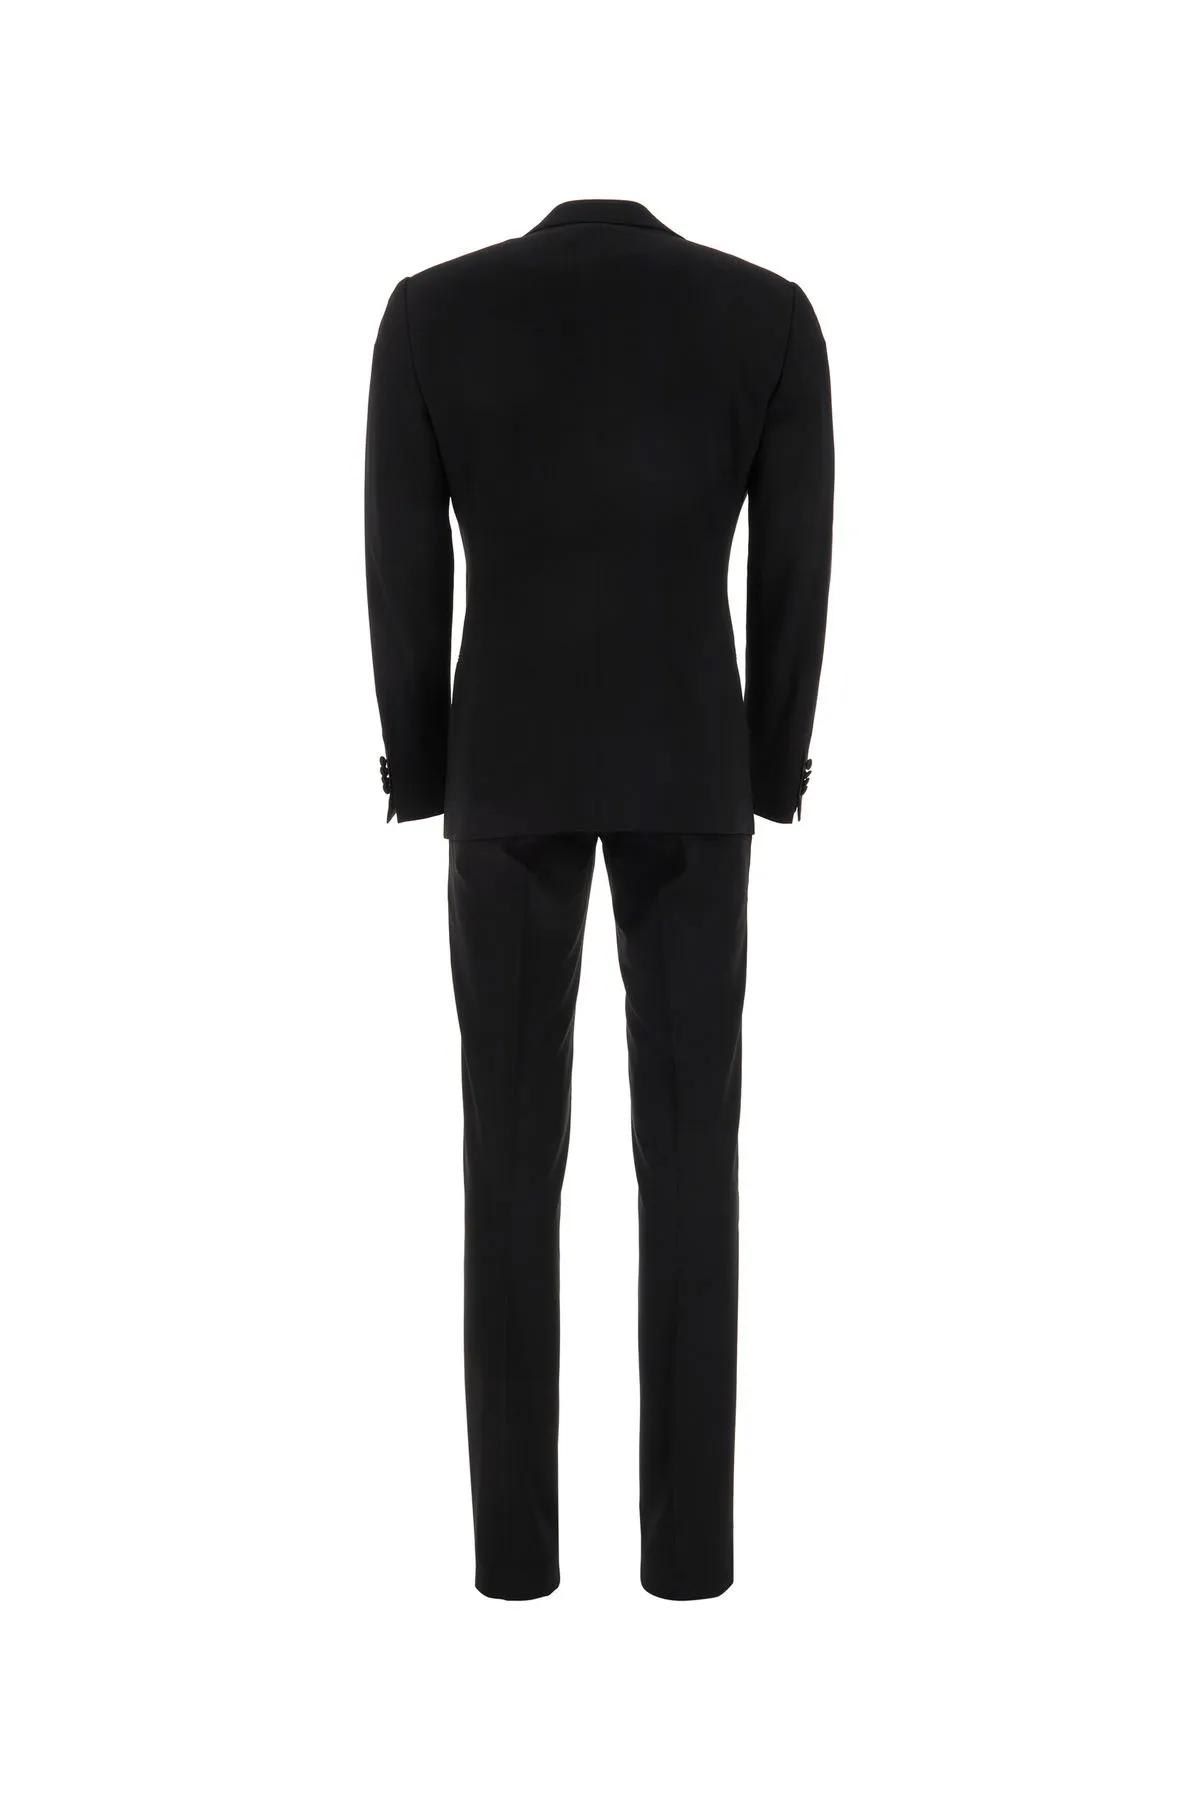 Shop Giorgio Armani Black Fabric Suit